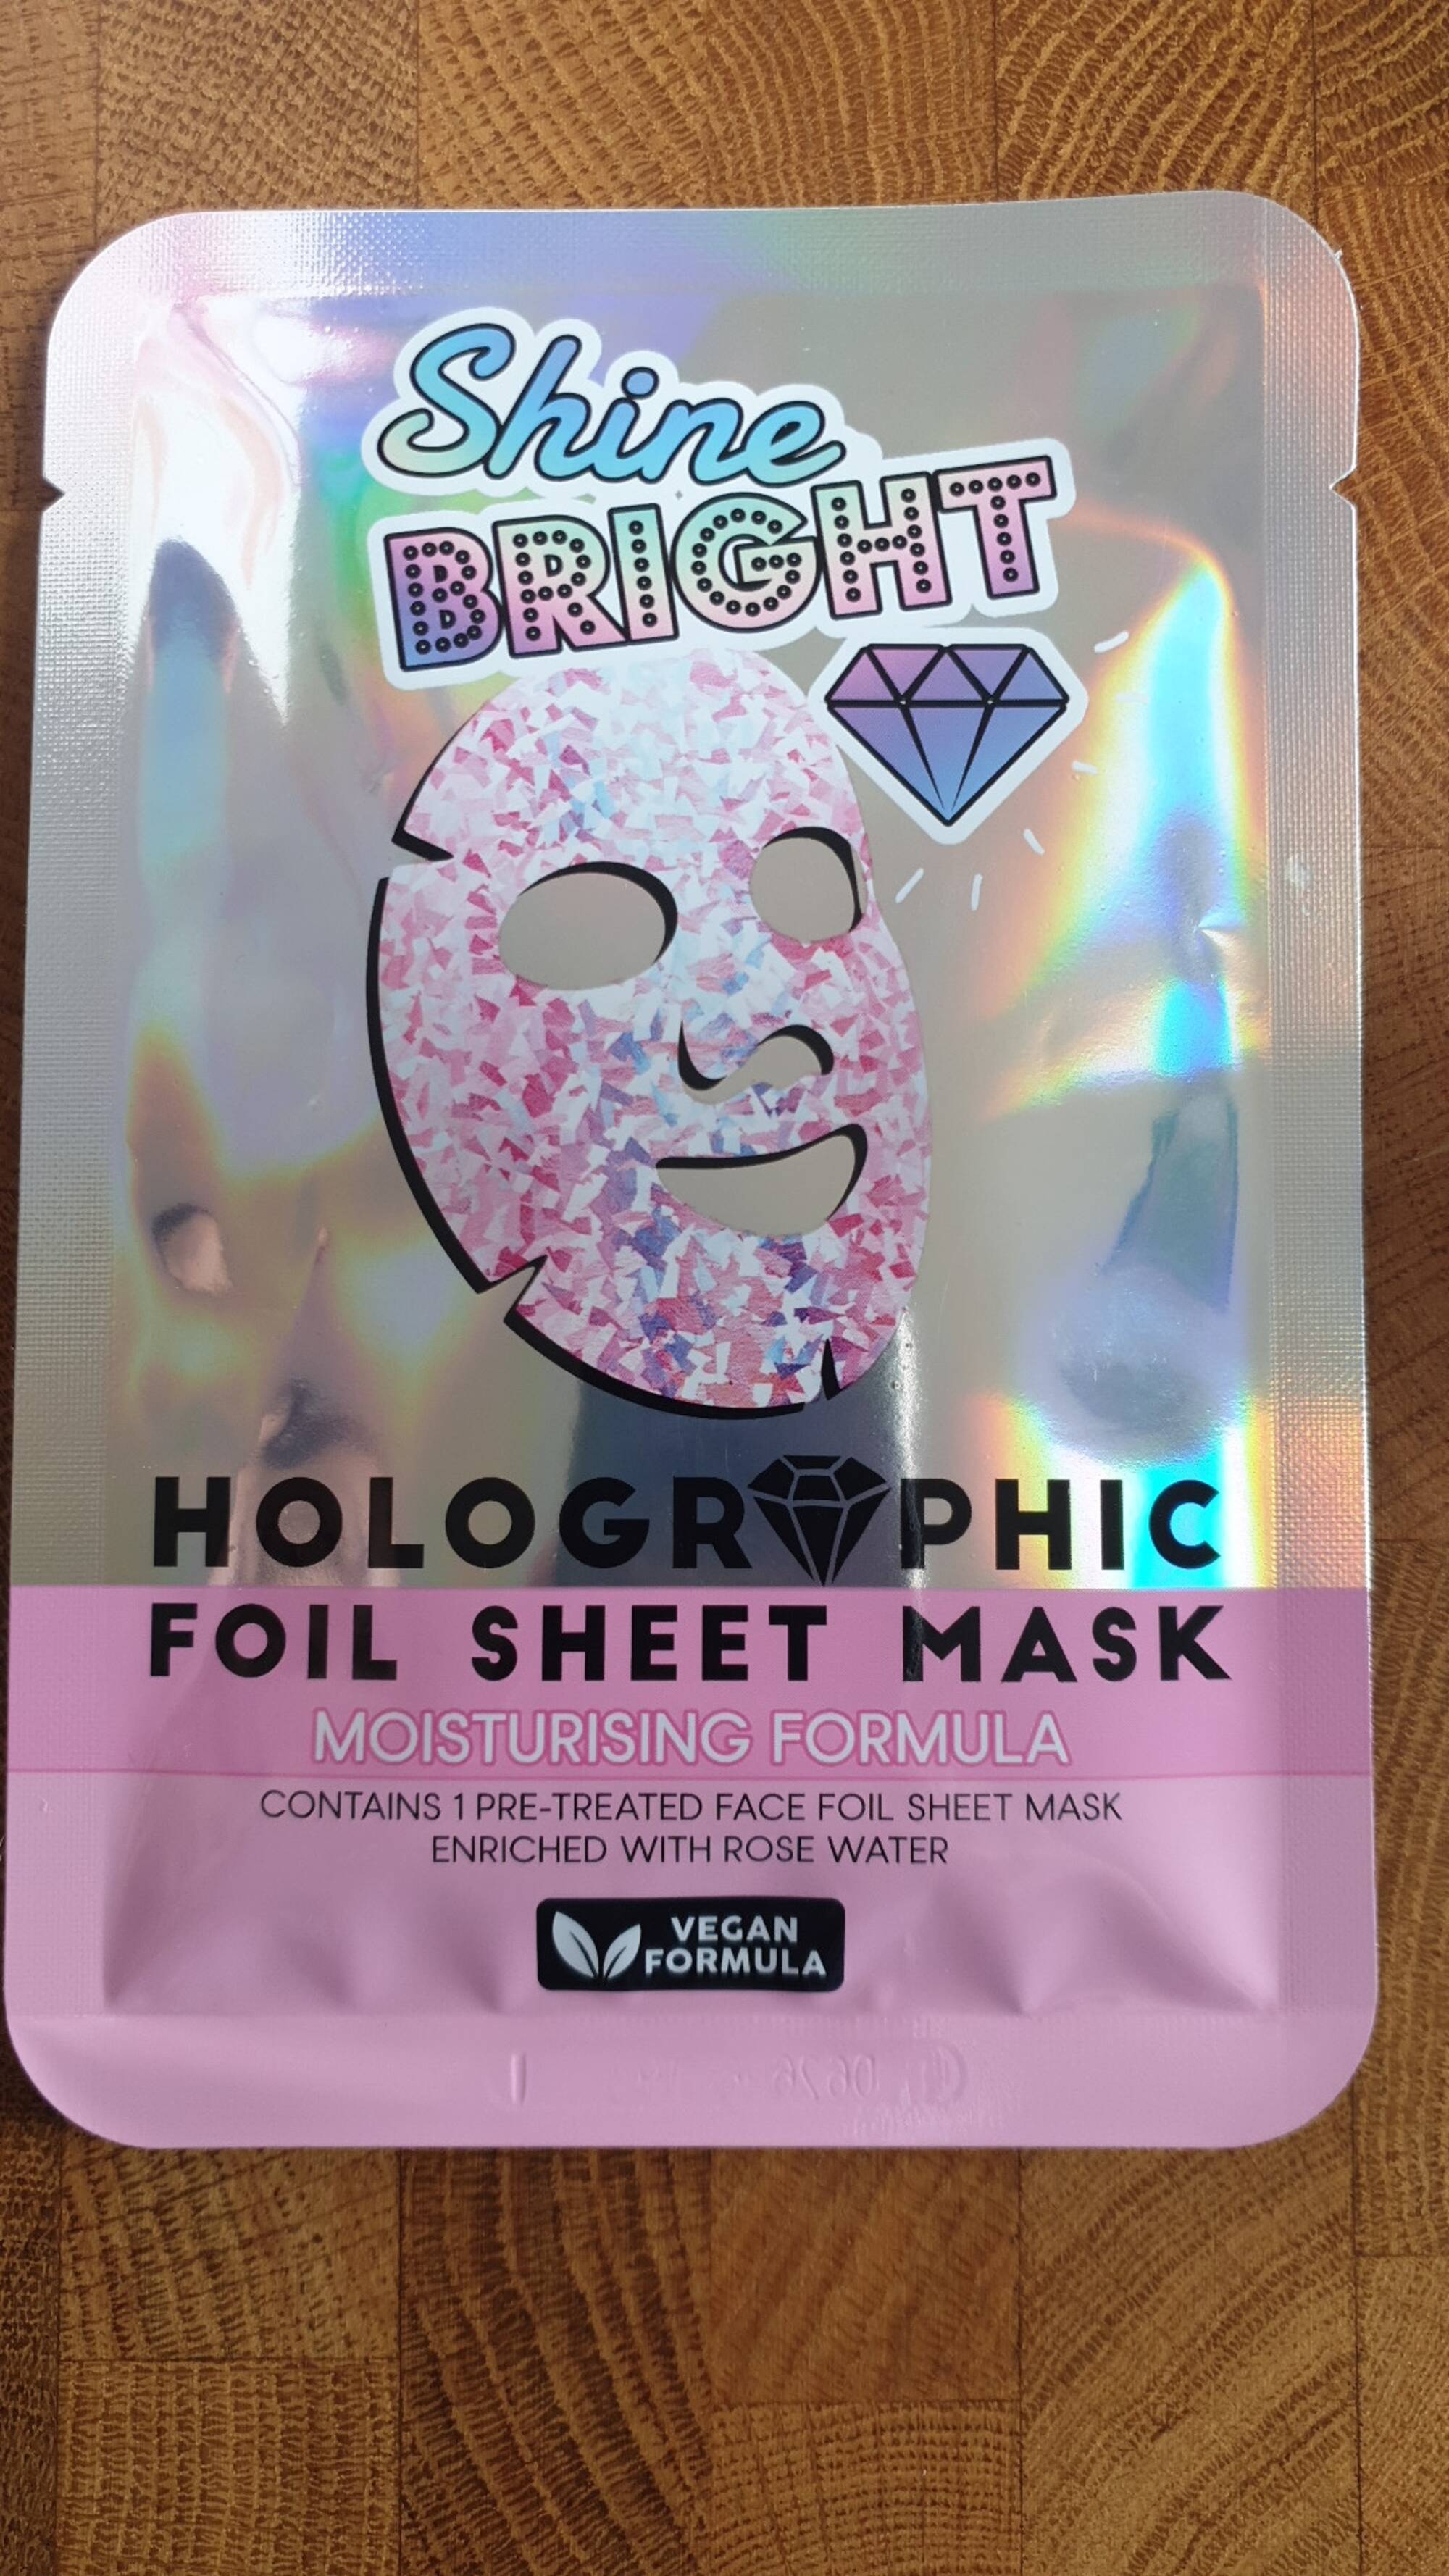 MAXBRANDS MARKETING B.V. - Shine bright - Holographic foil sheet mask